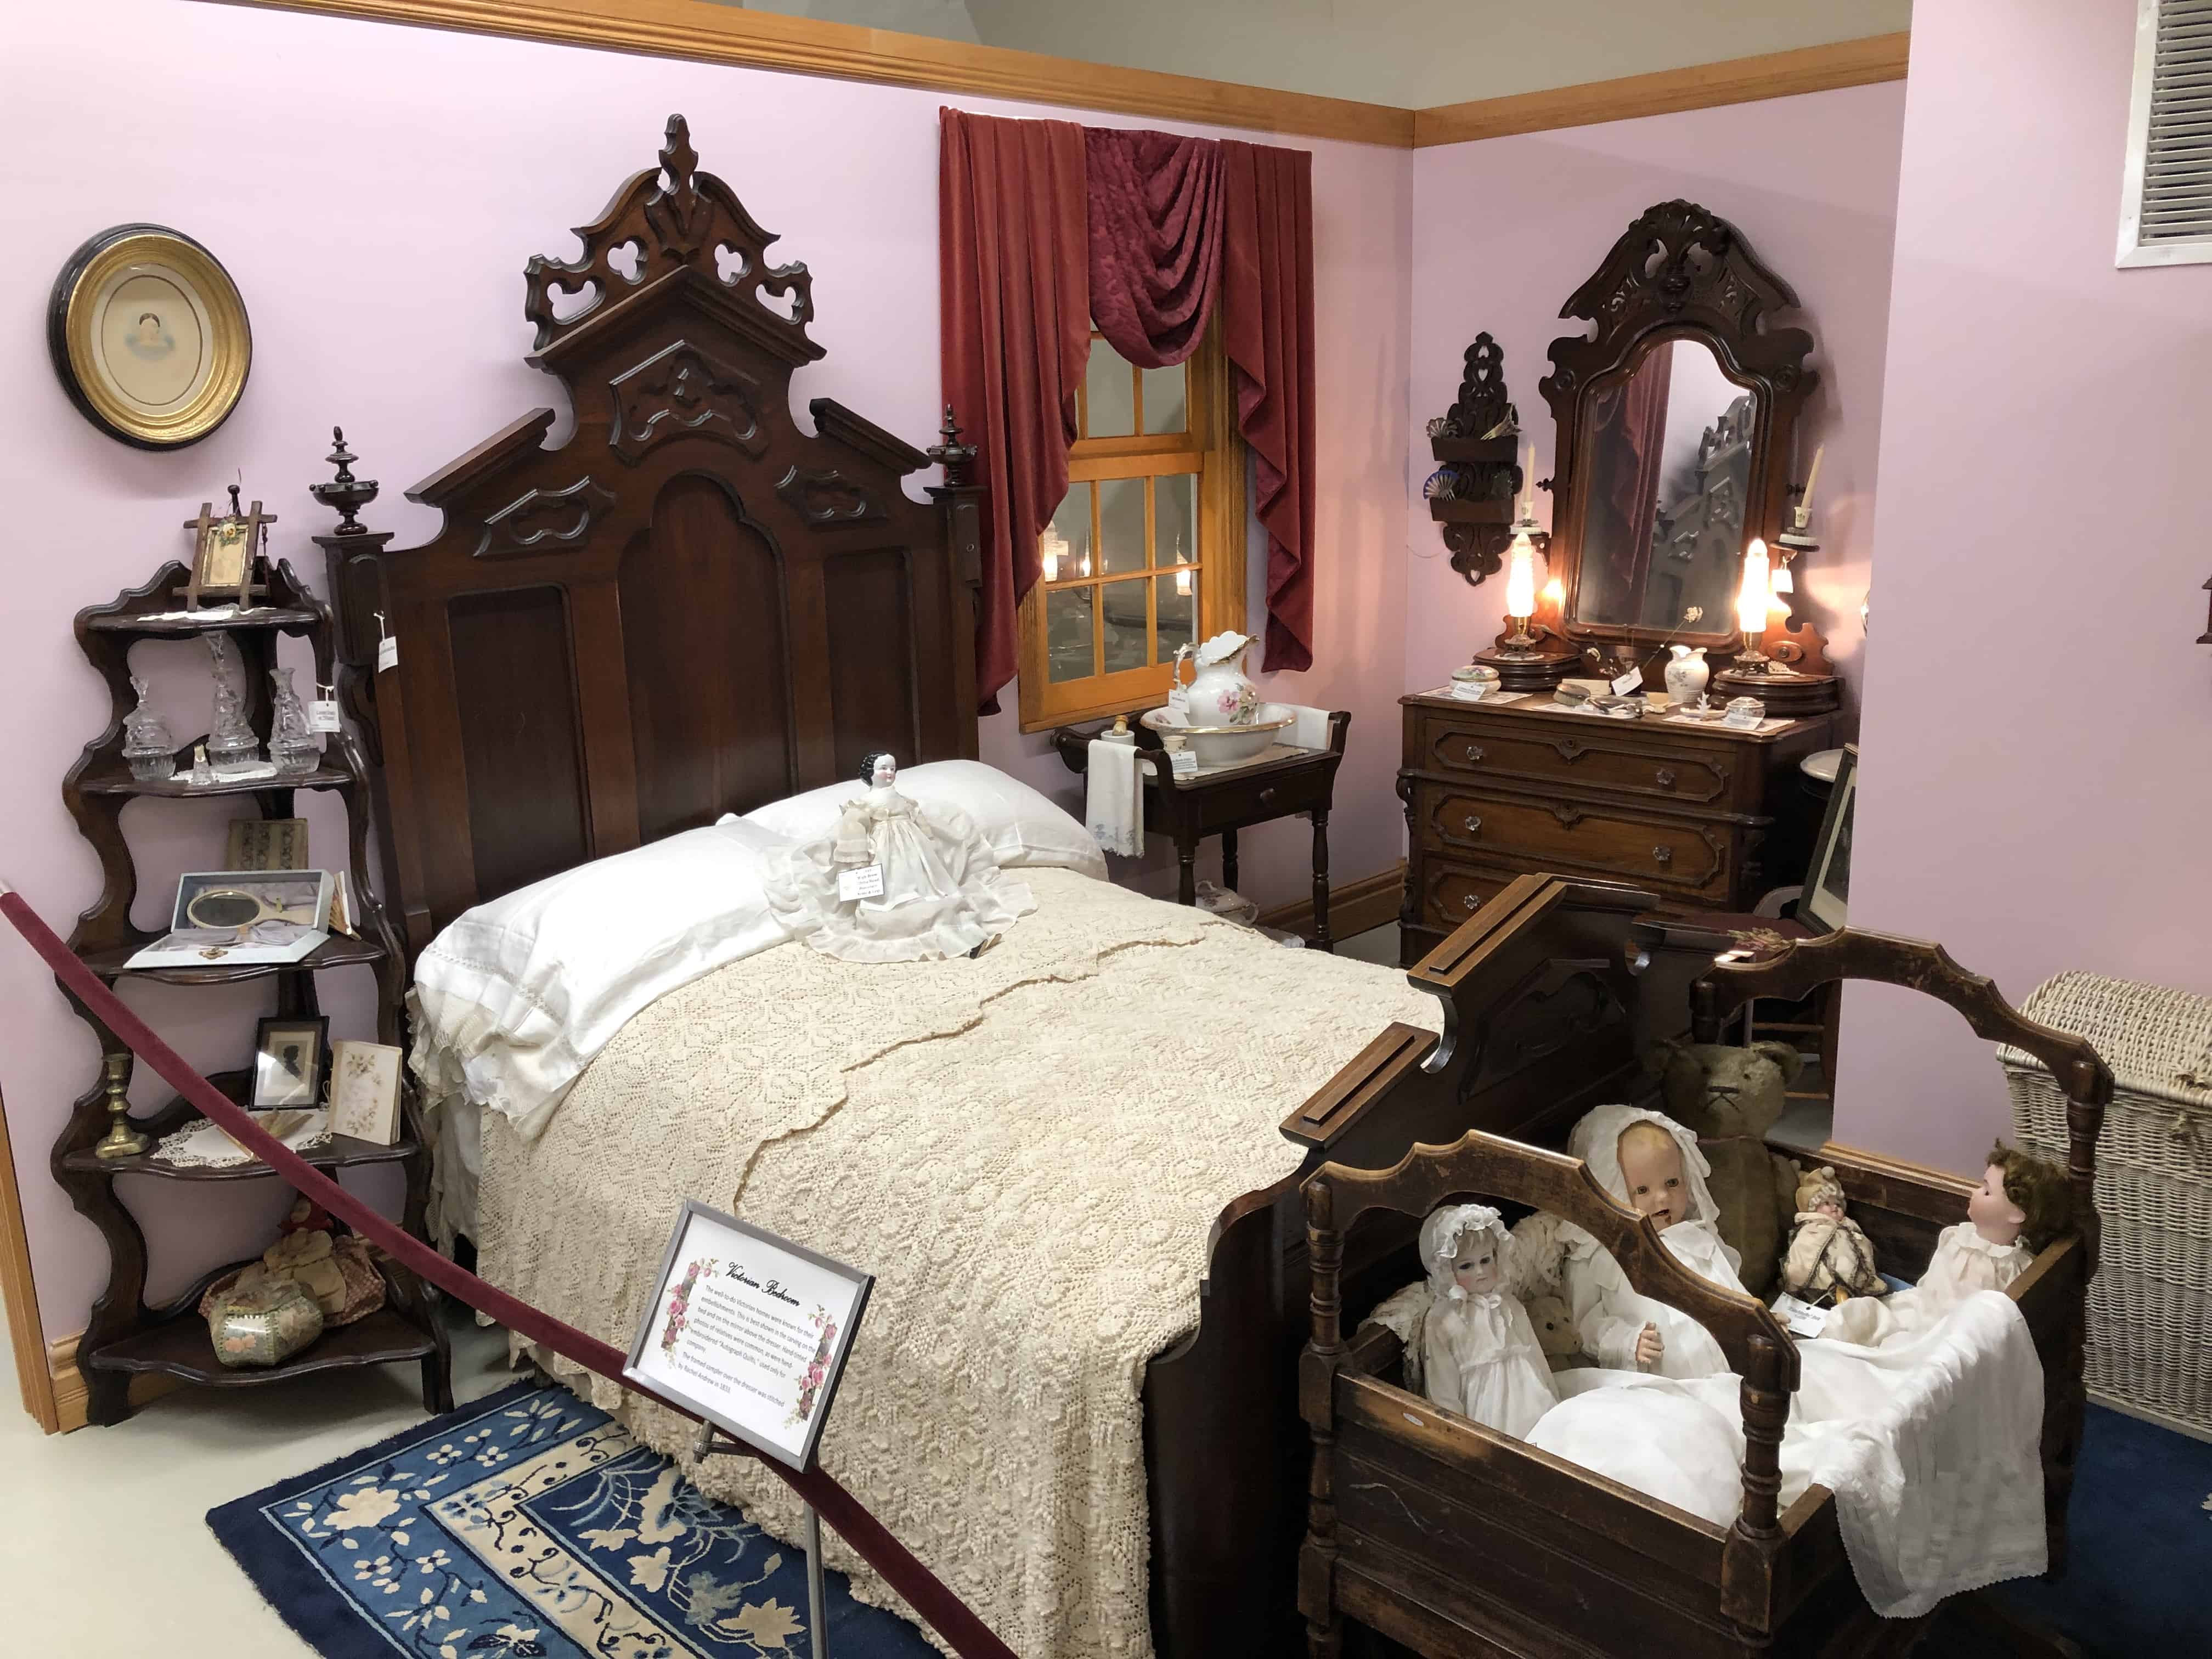 Victorian bedroom at the La Porte County Historical Society Museum in La Porte, Indiana